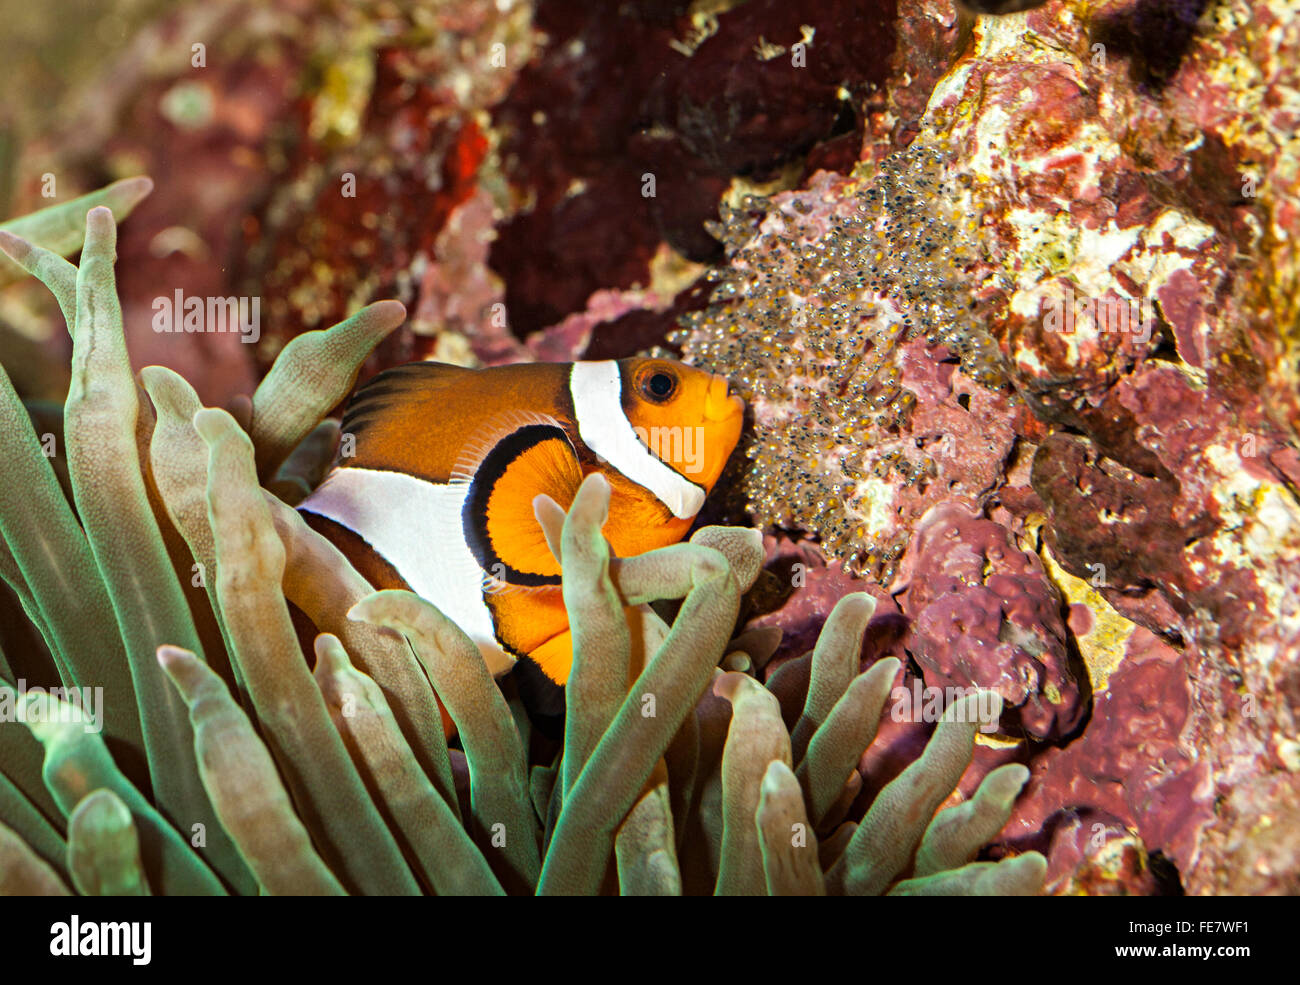 Common clownfish Amphiprion percula tending eggs Stock Photo